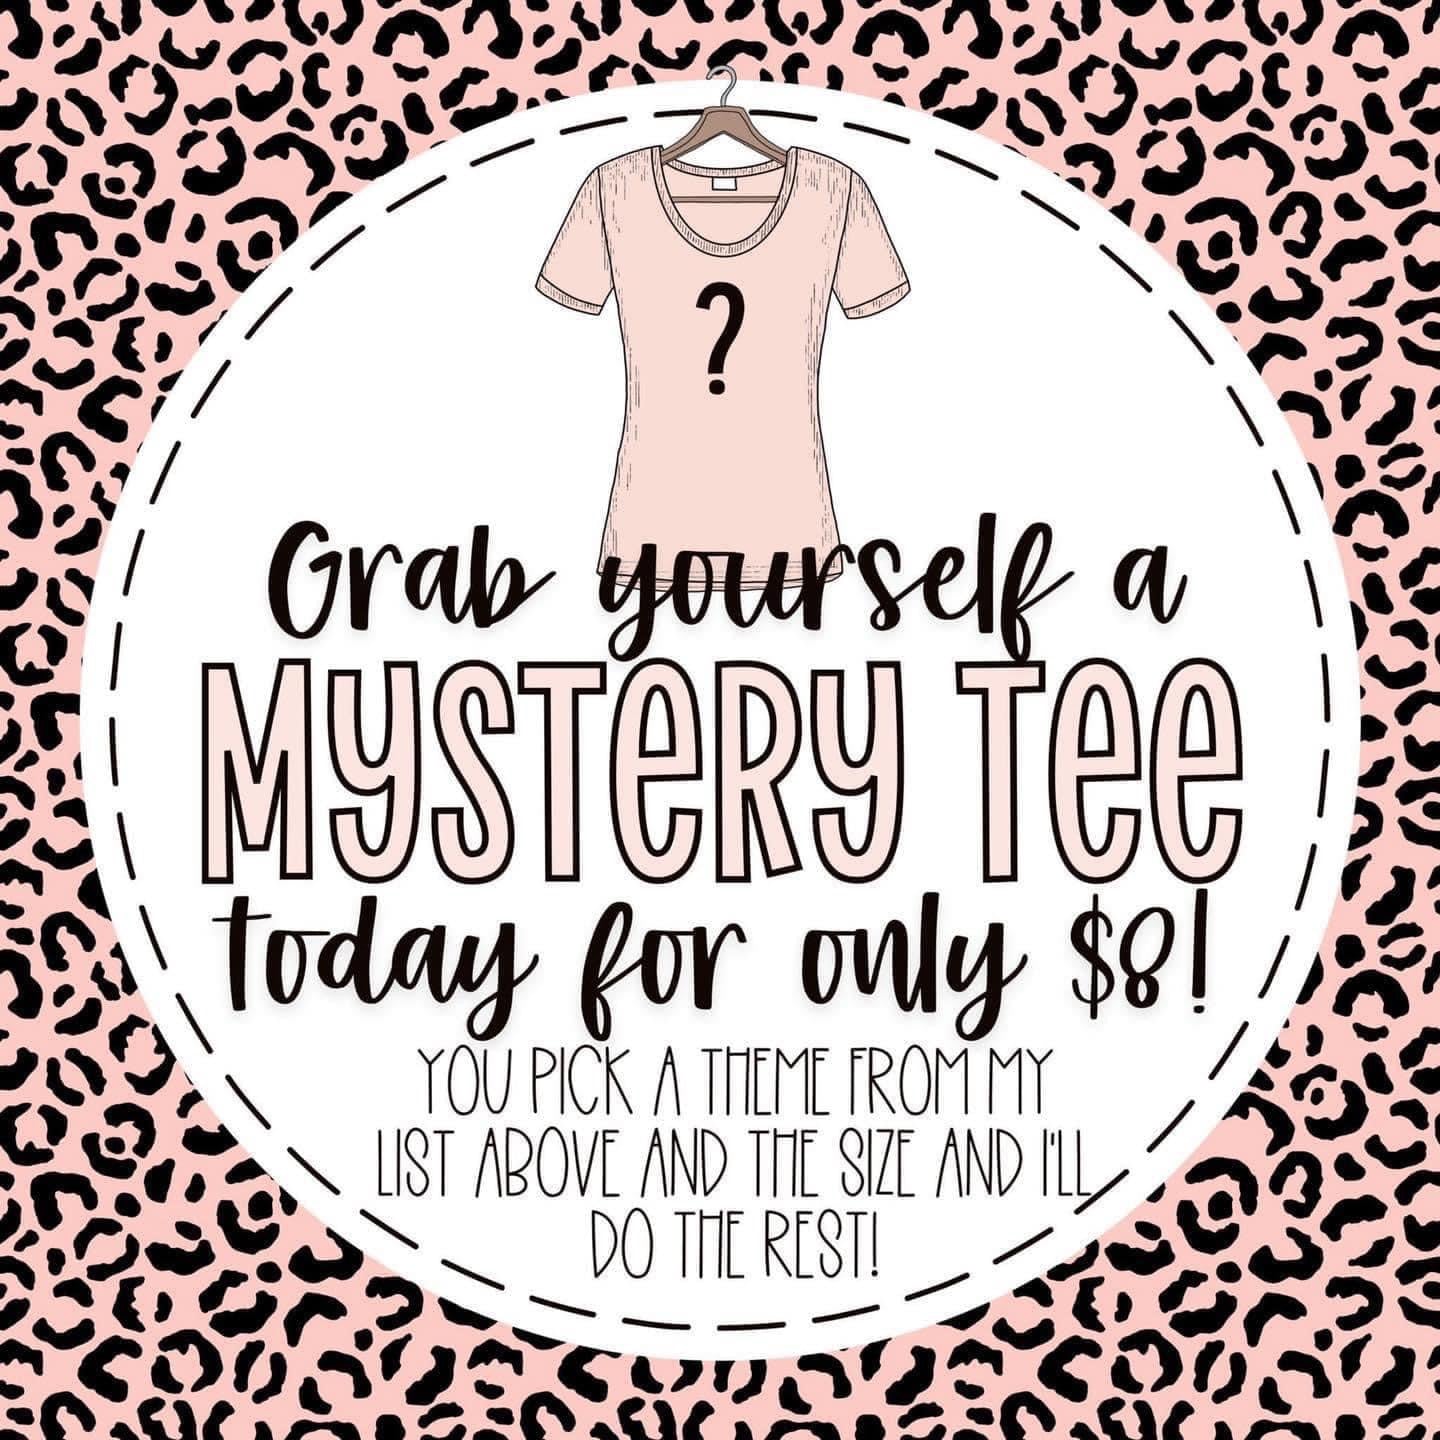 $6.50 Mystery Tee